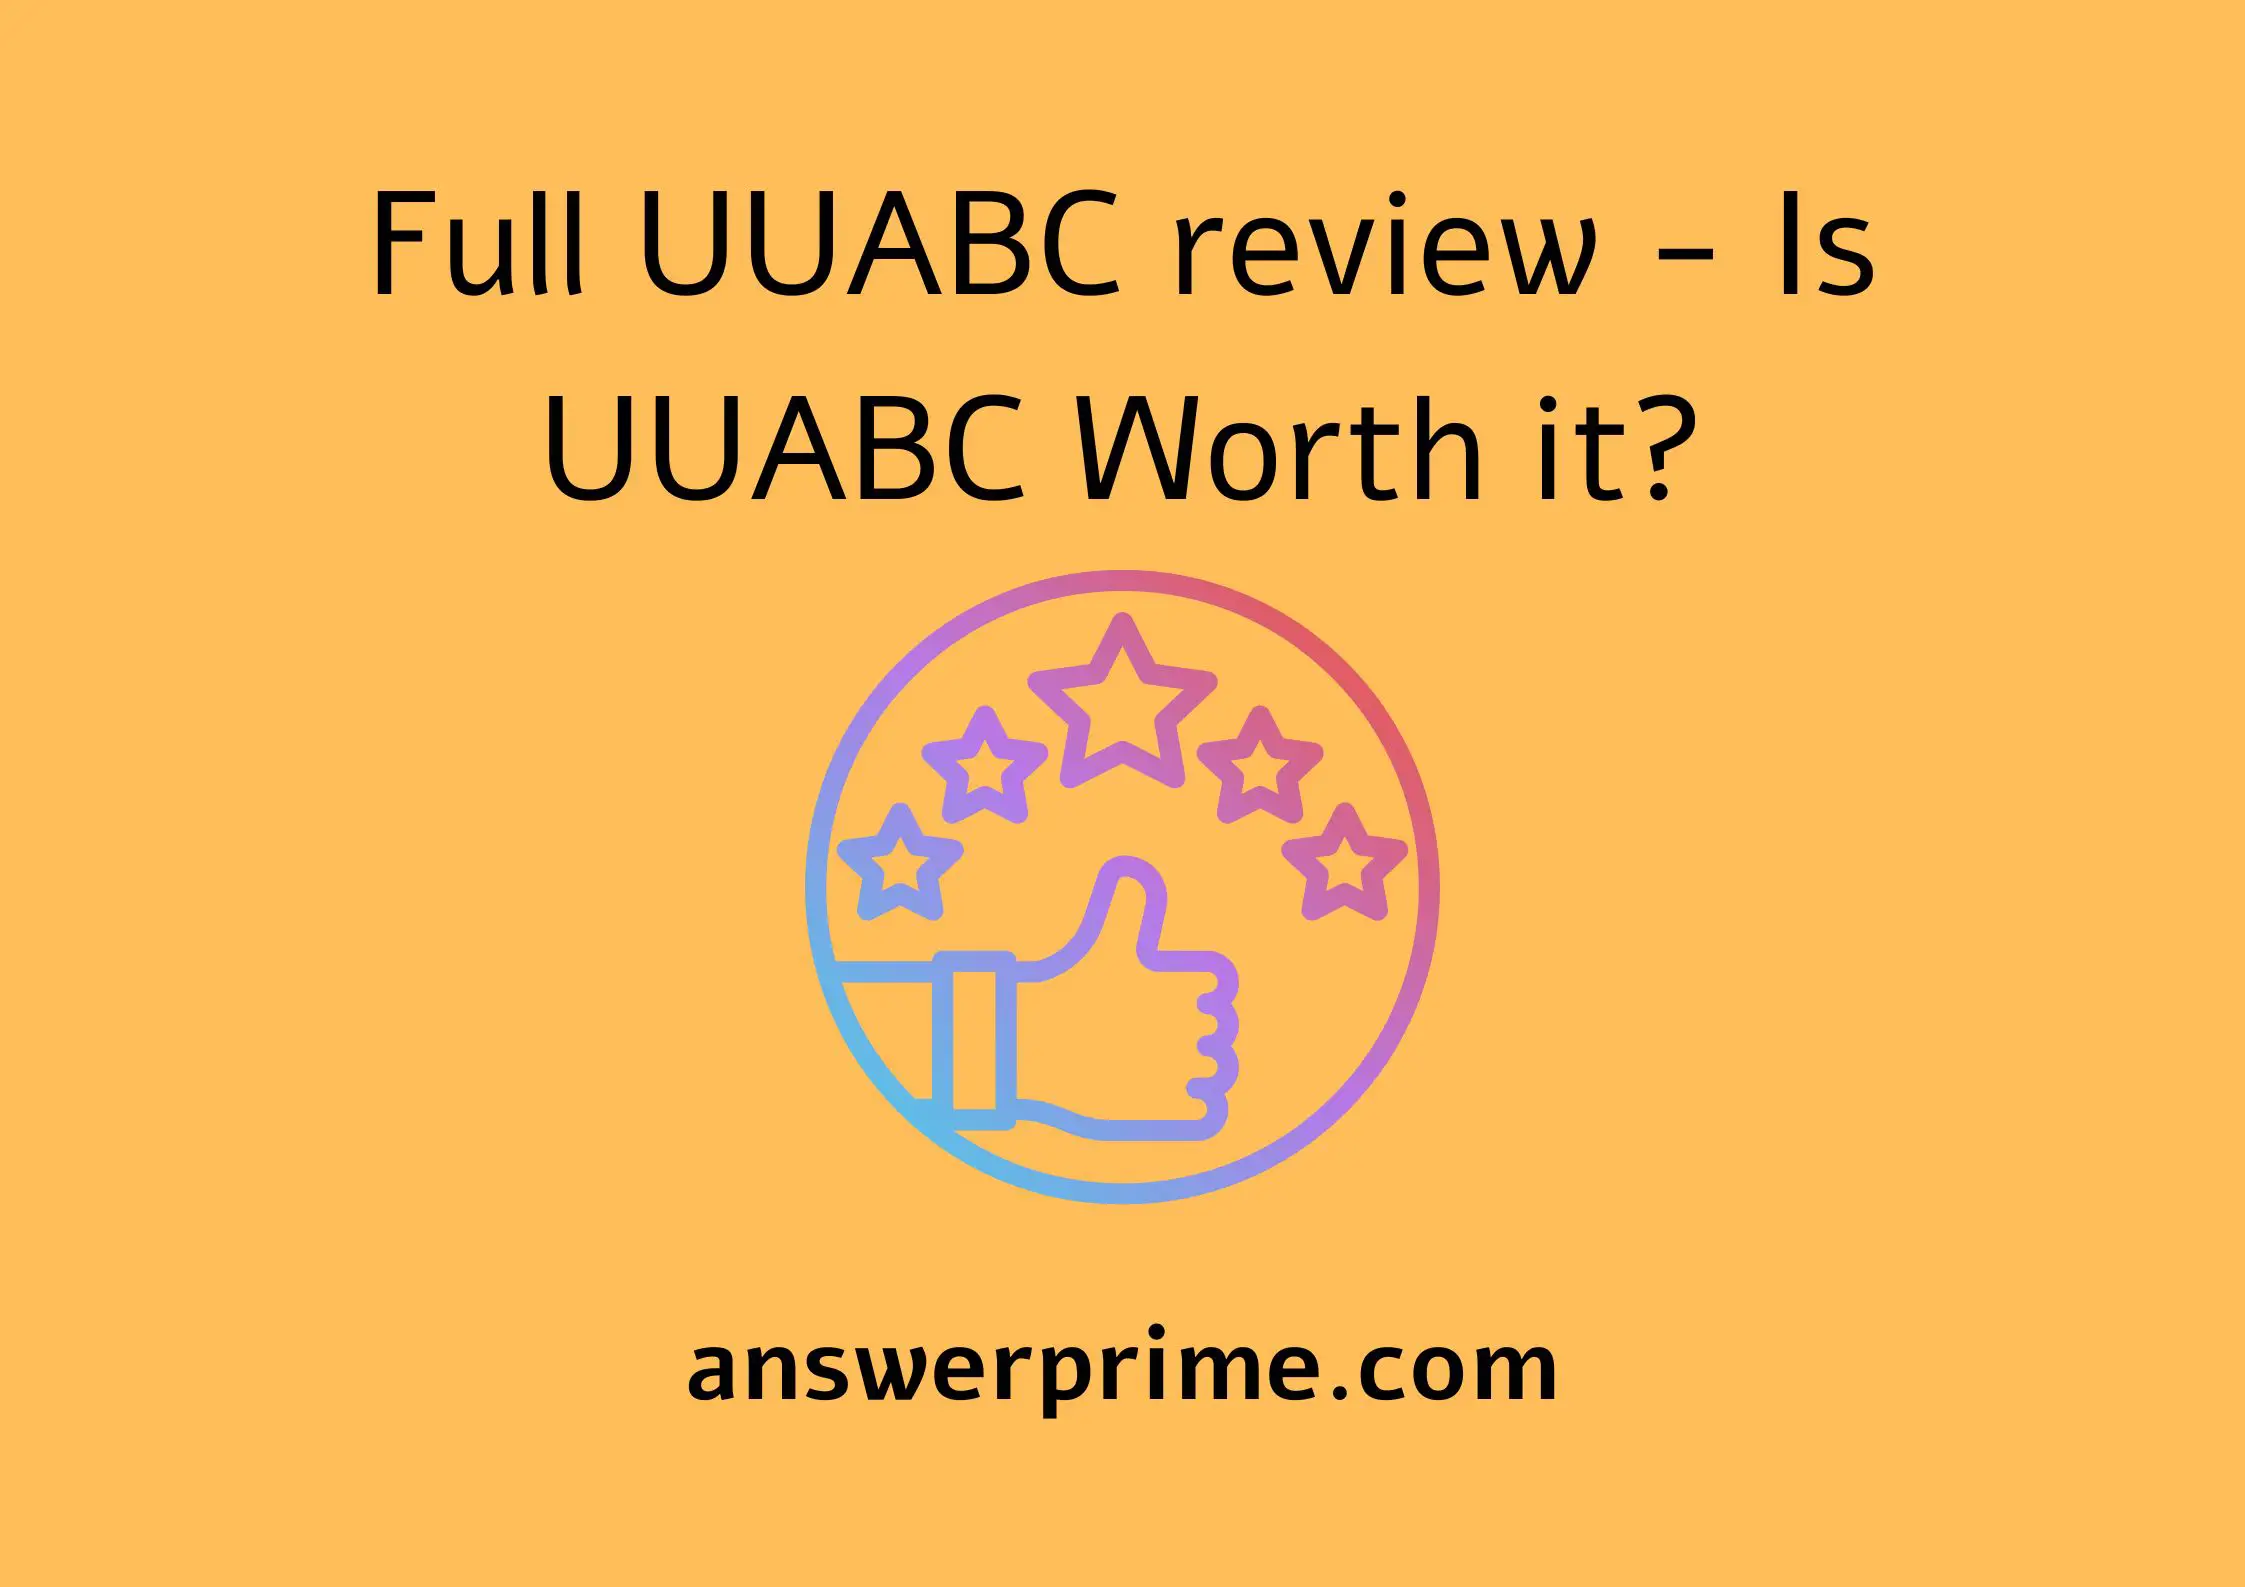 Full UUABC review - Is UUABC Worth it?